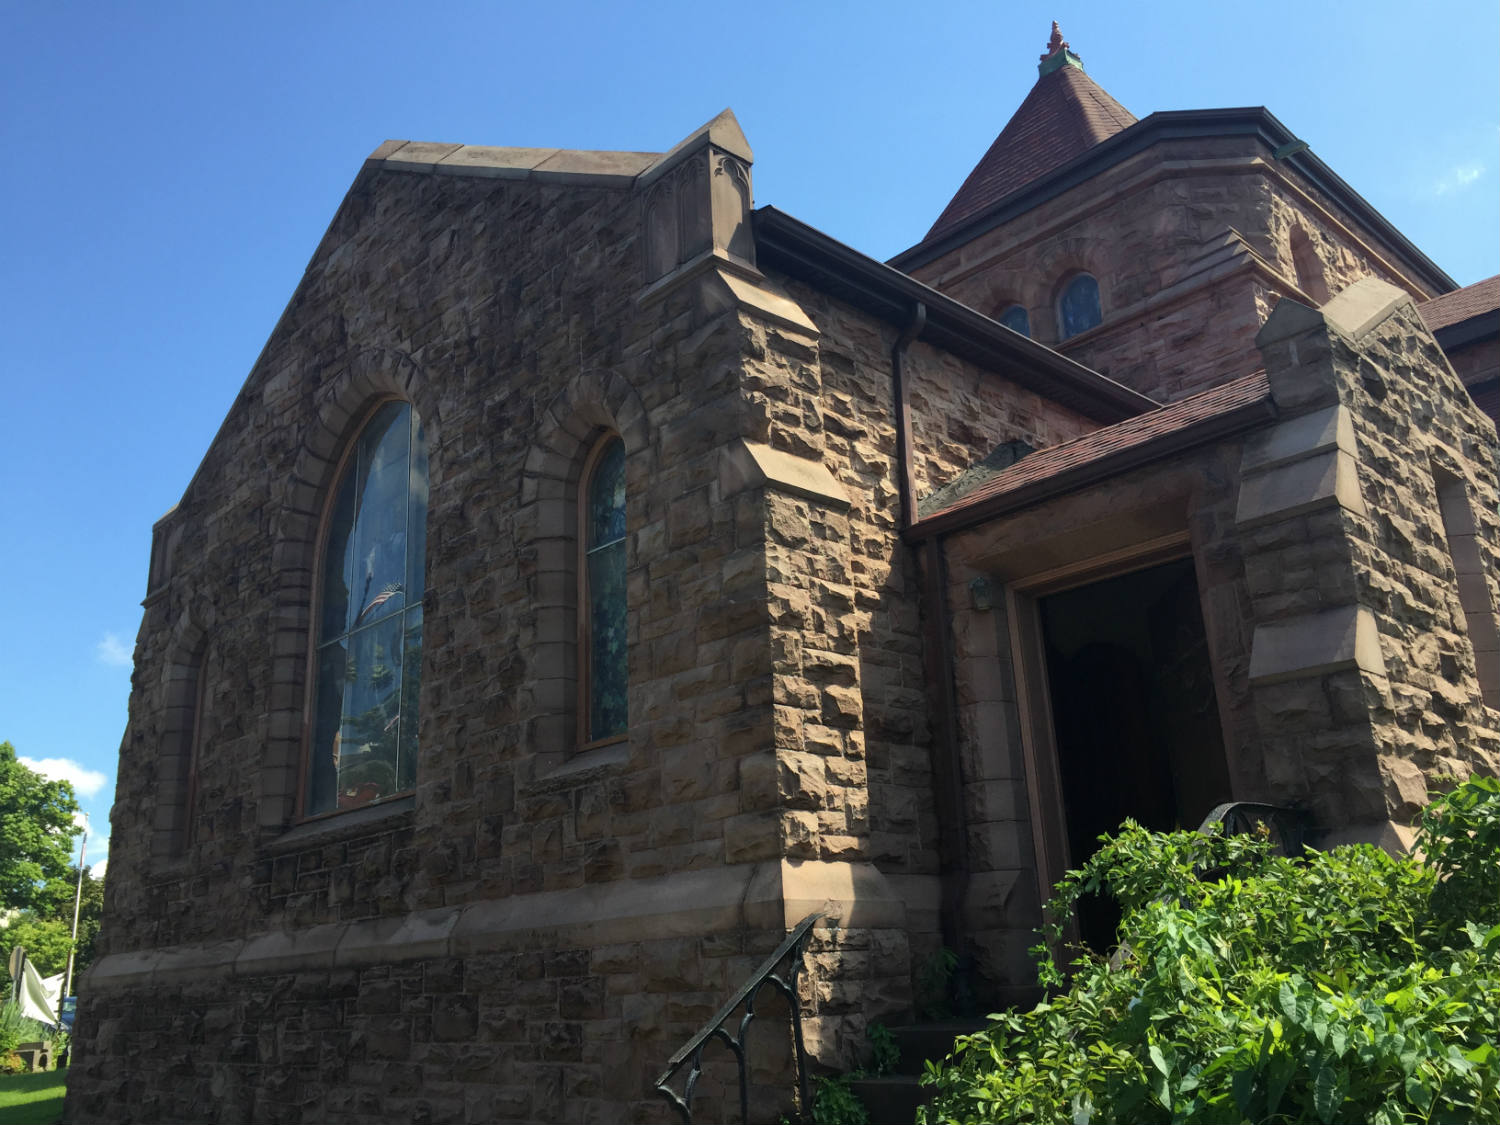 Pullman Memorial Universalist Church in Albion, New York